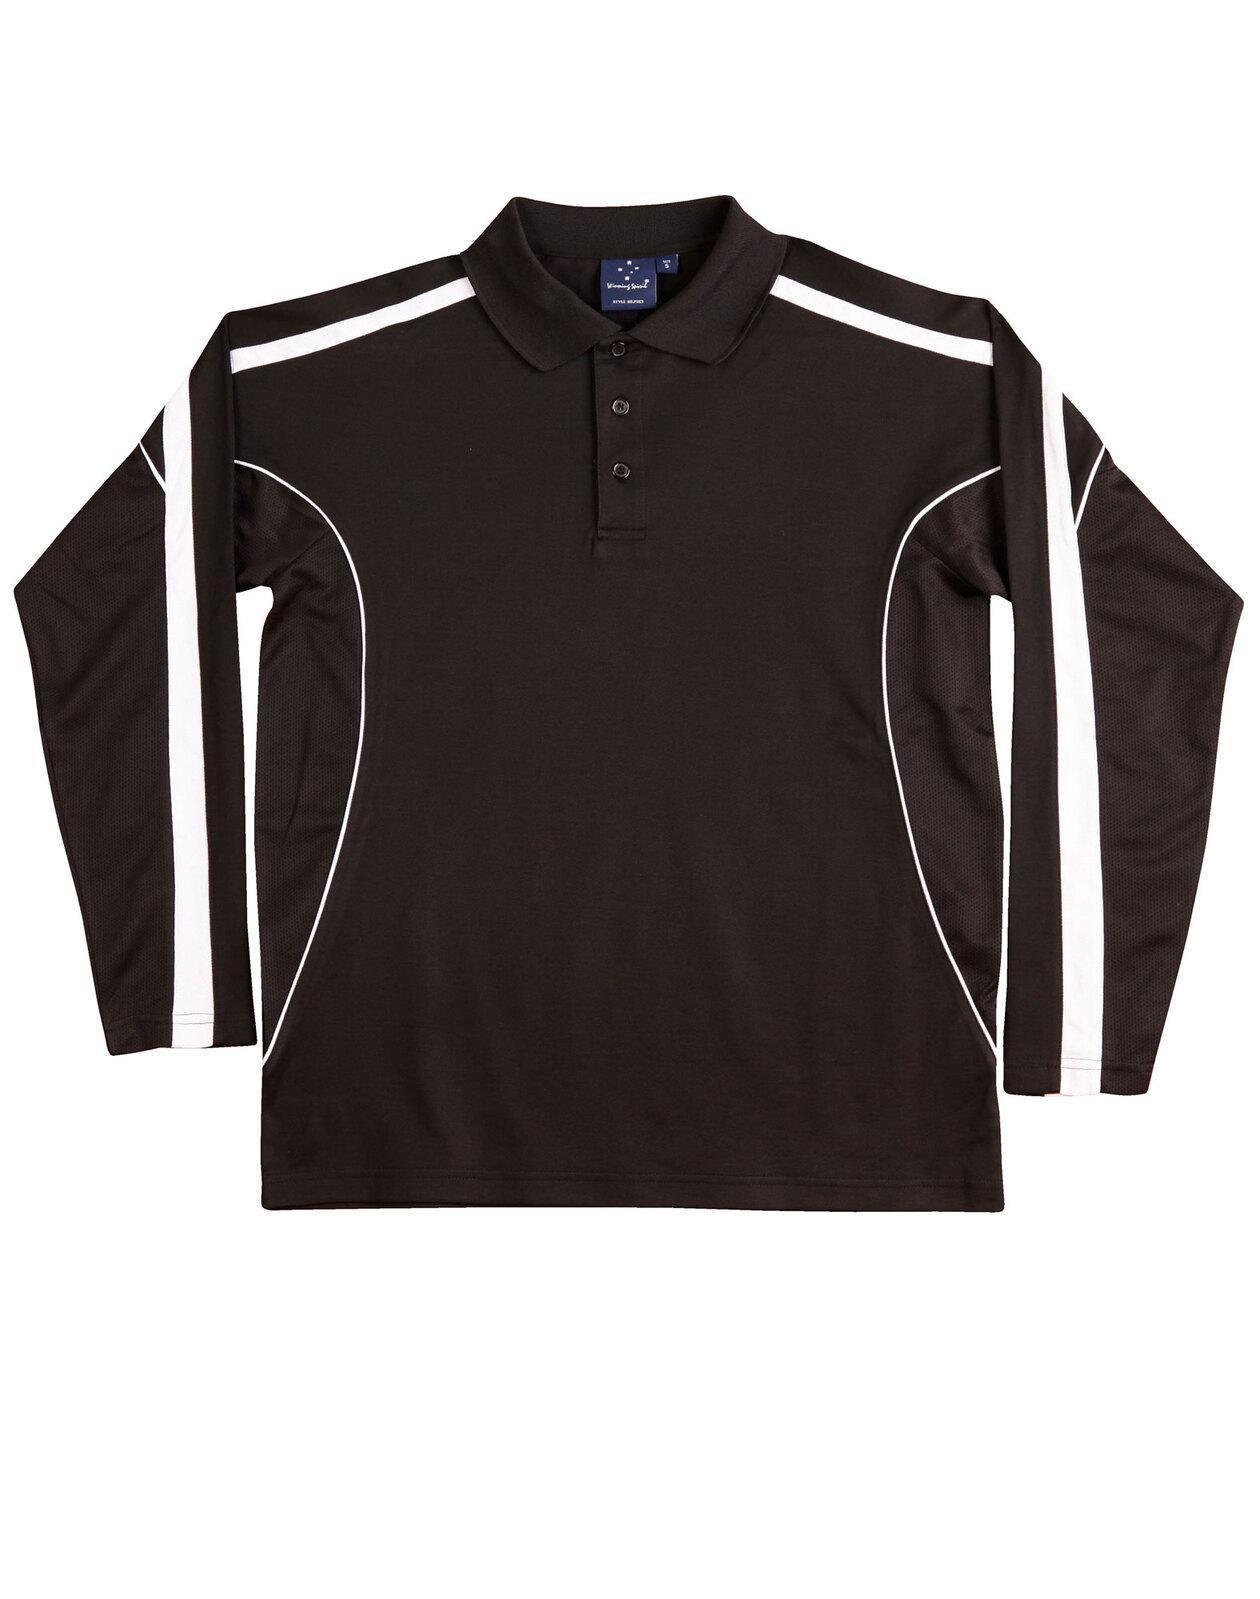 PS70 Sz 12 LEGEND PLUS Polyester Cotton Ladies Polo Shirt Black/White